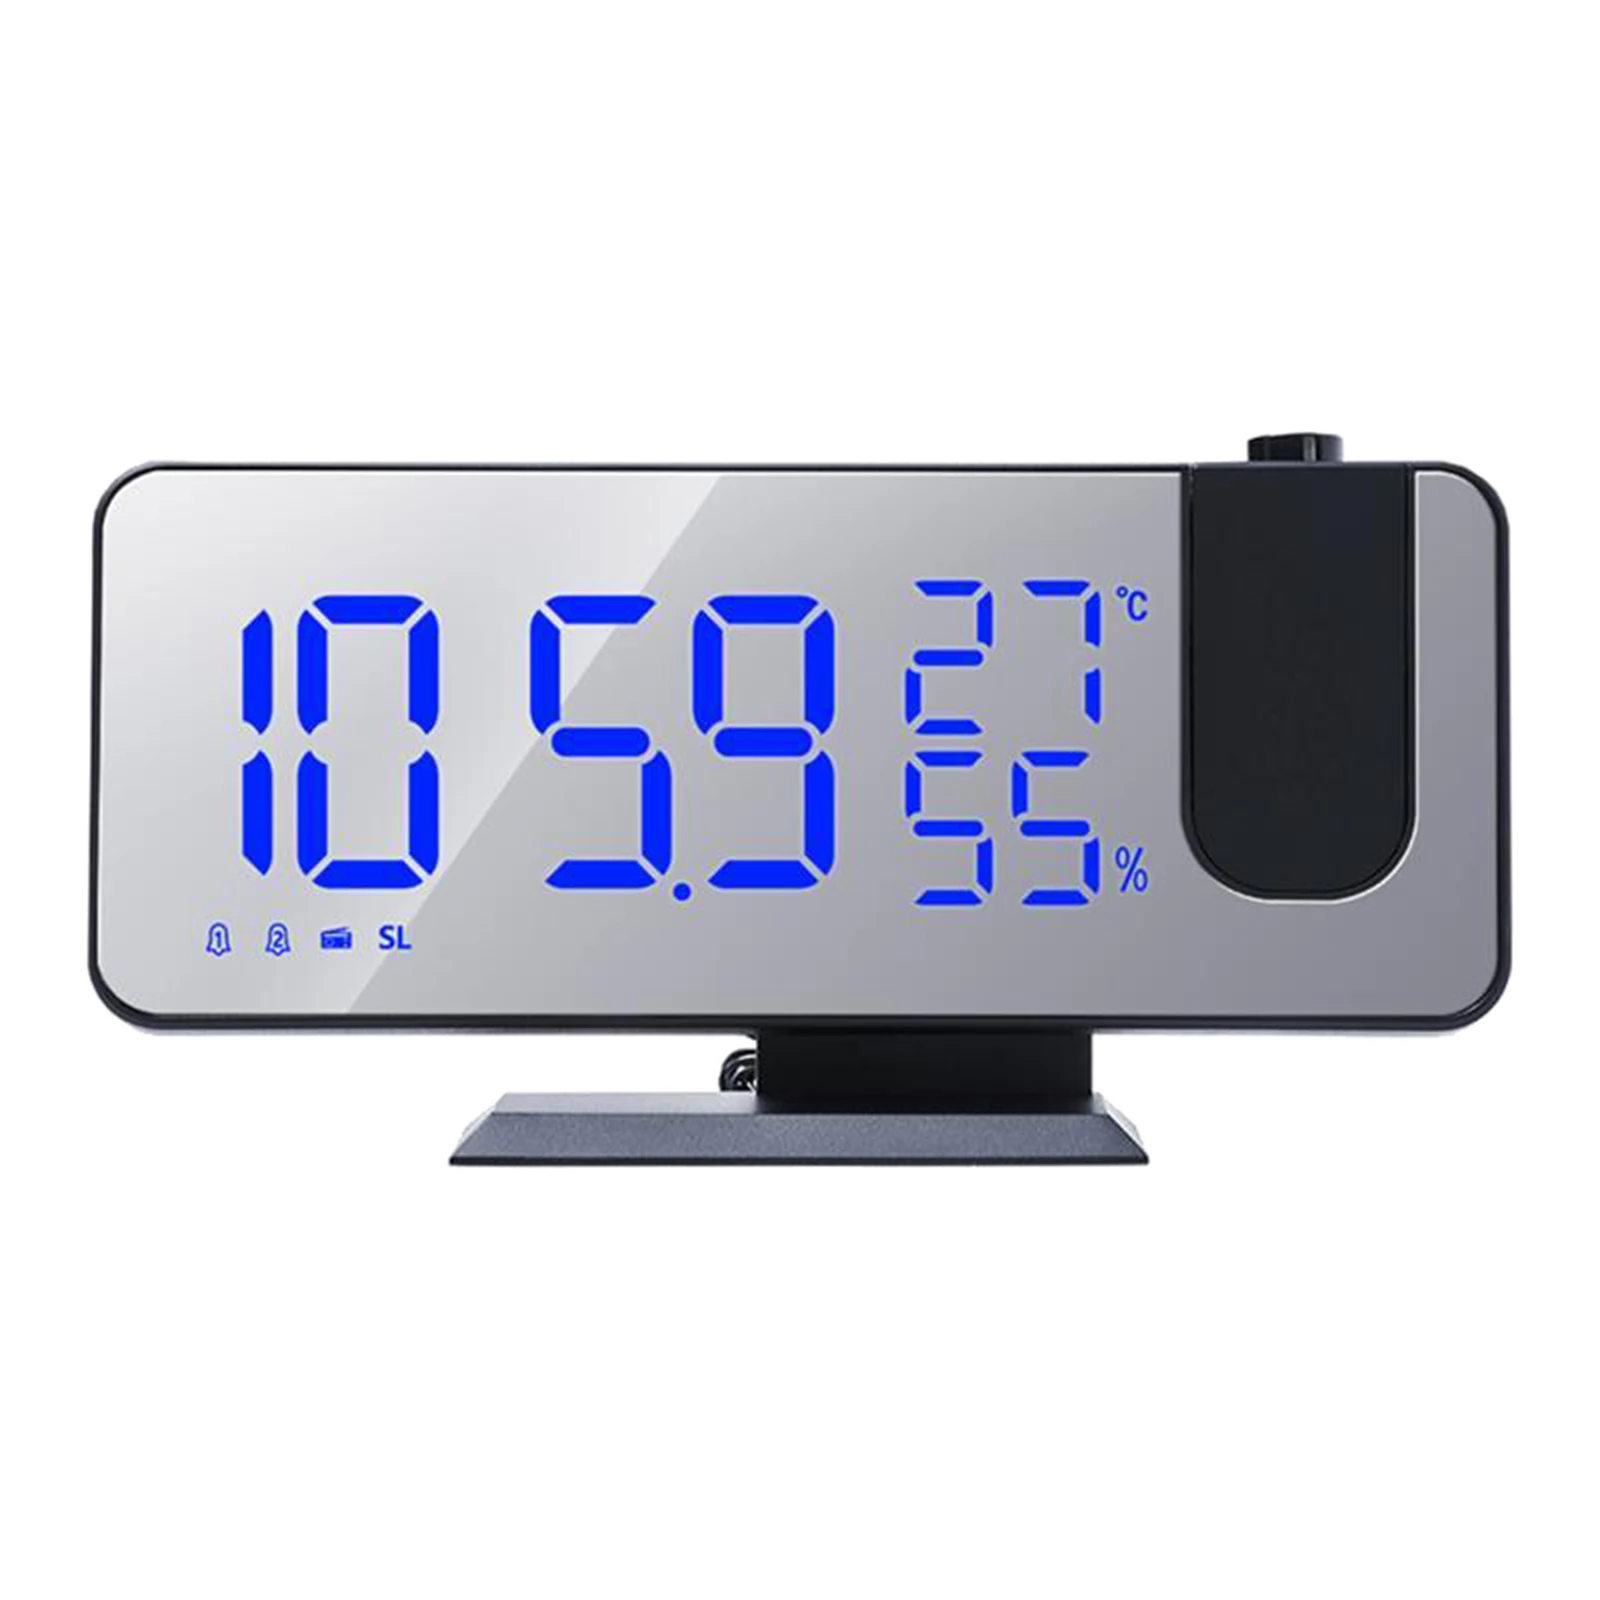 LED Mirror Alarm Clock FM Rdion Digital Snooze Table Clock Wake Up Light Electronic Temperature Display Home Decoration Clock